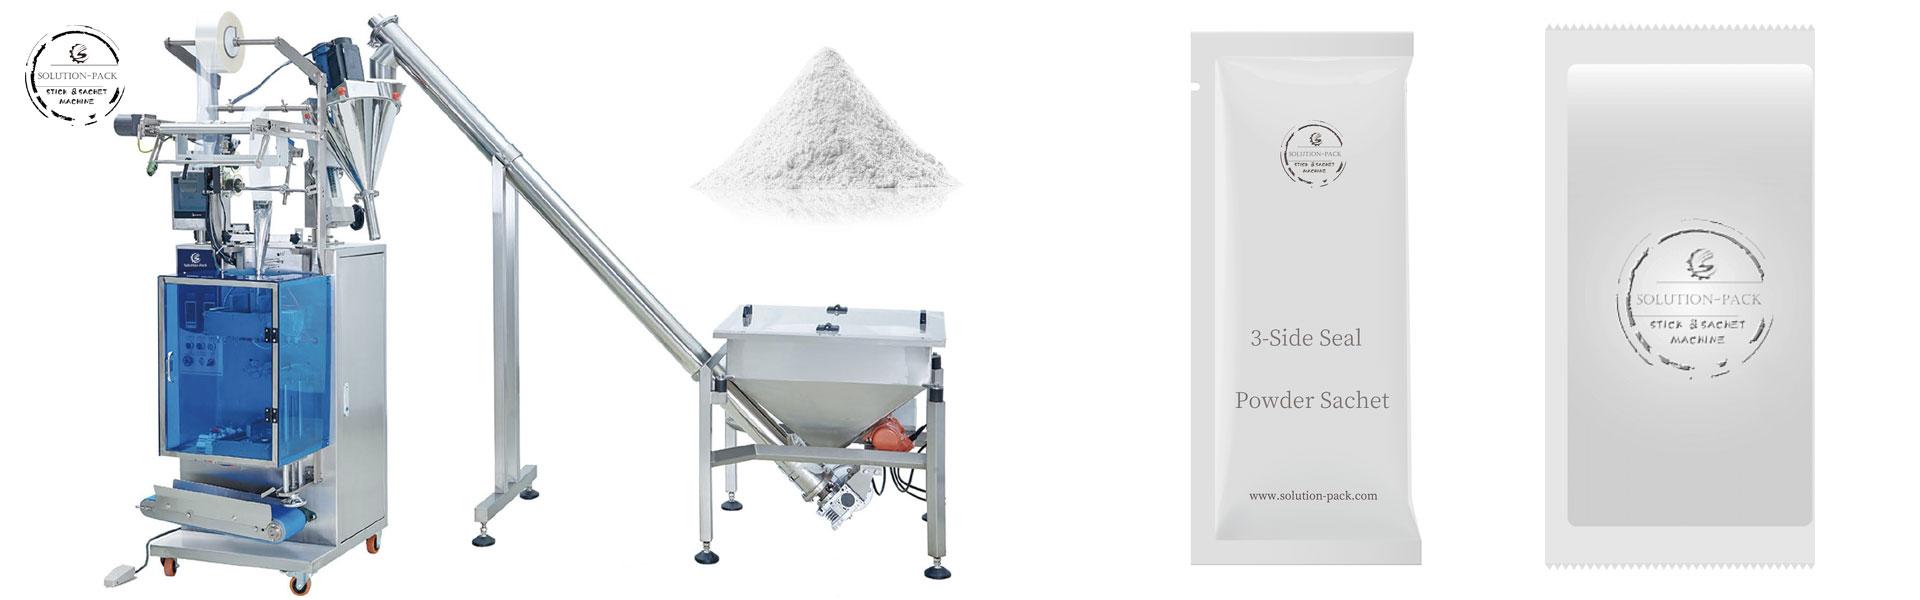 Solution-Pack | 3-Side Seal Powder Sachet Packing Machine | Powder Stick Sachet | Powder Sachet Packing Machine | Sachet Packing Machine